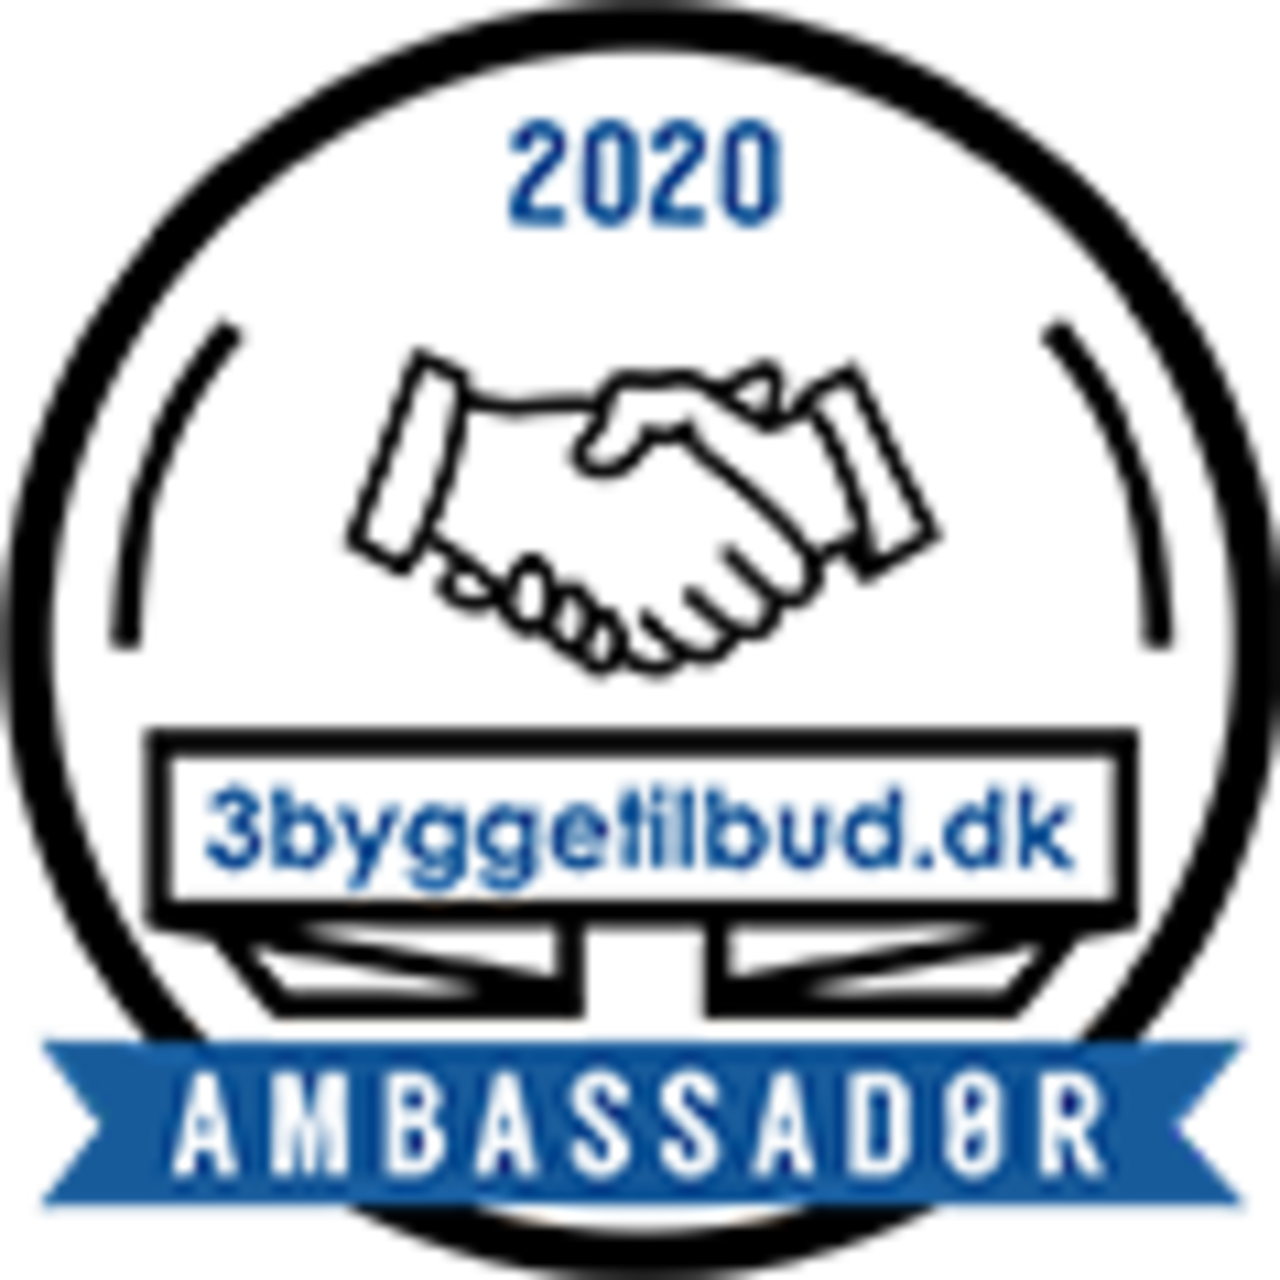 3byggetilbud 2020 ambassadør